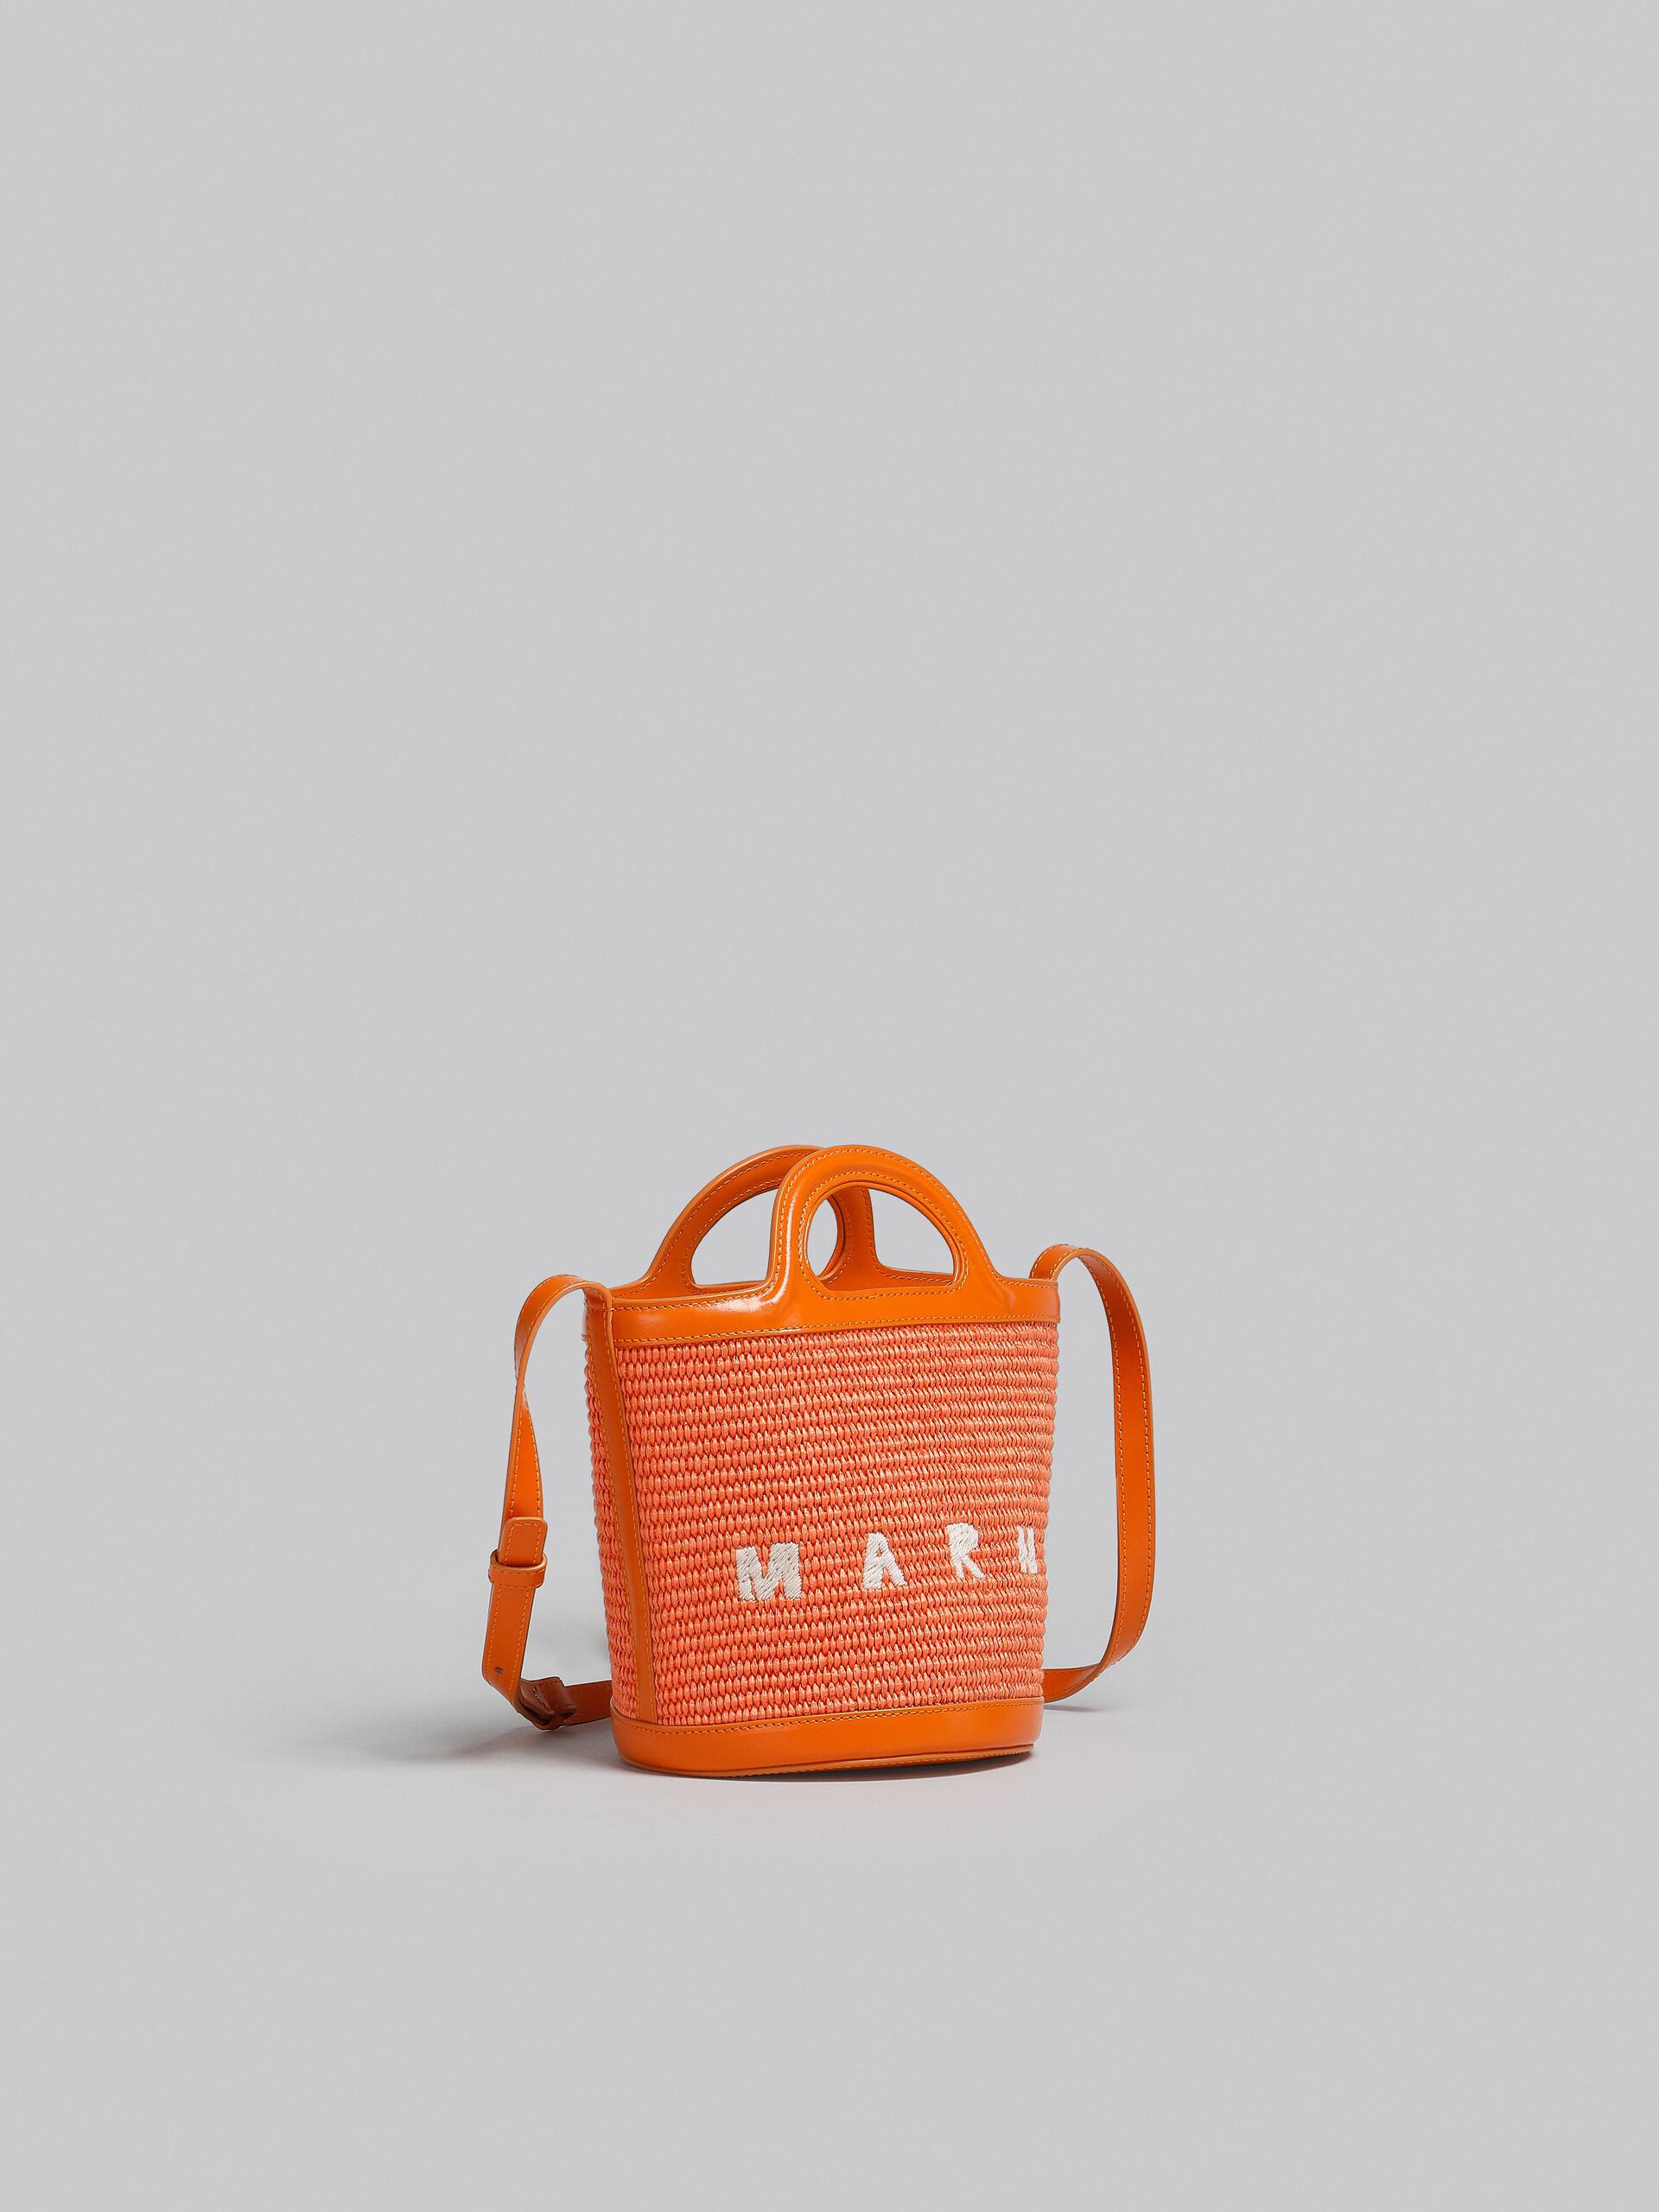 Tropicalia Small Bucket Bag in orange leather and raffia - Shoulder Bag - Image 6